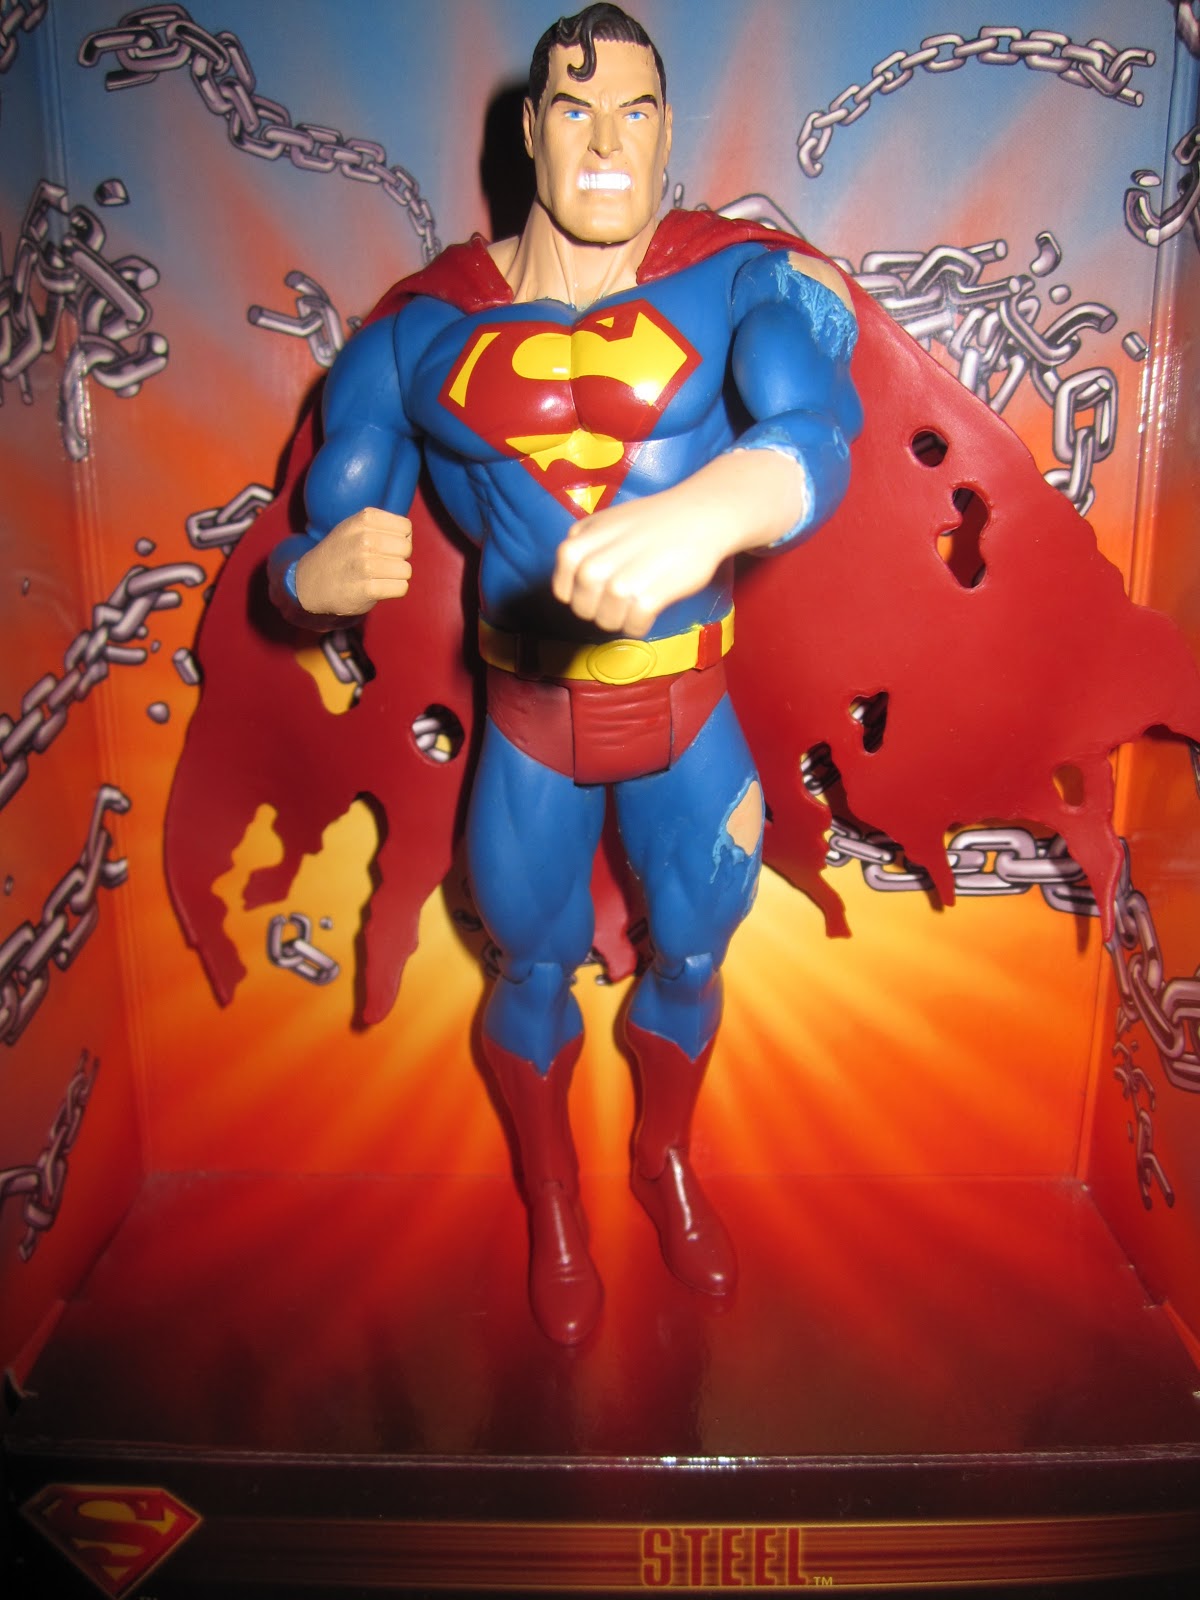 Infinite Crisis Superman Figurine DC Direct